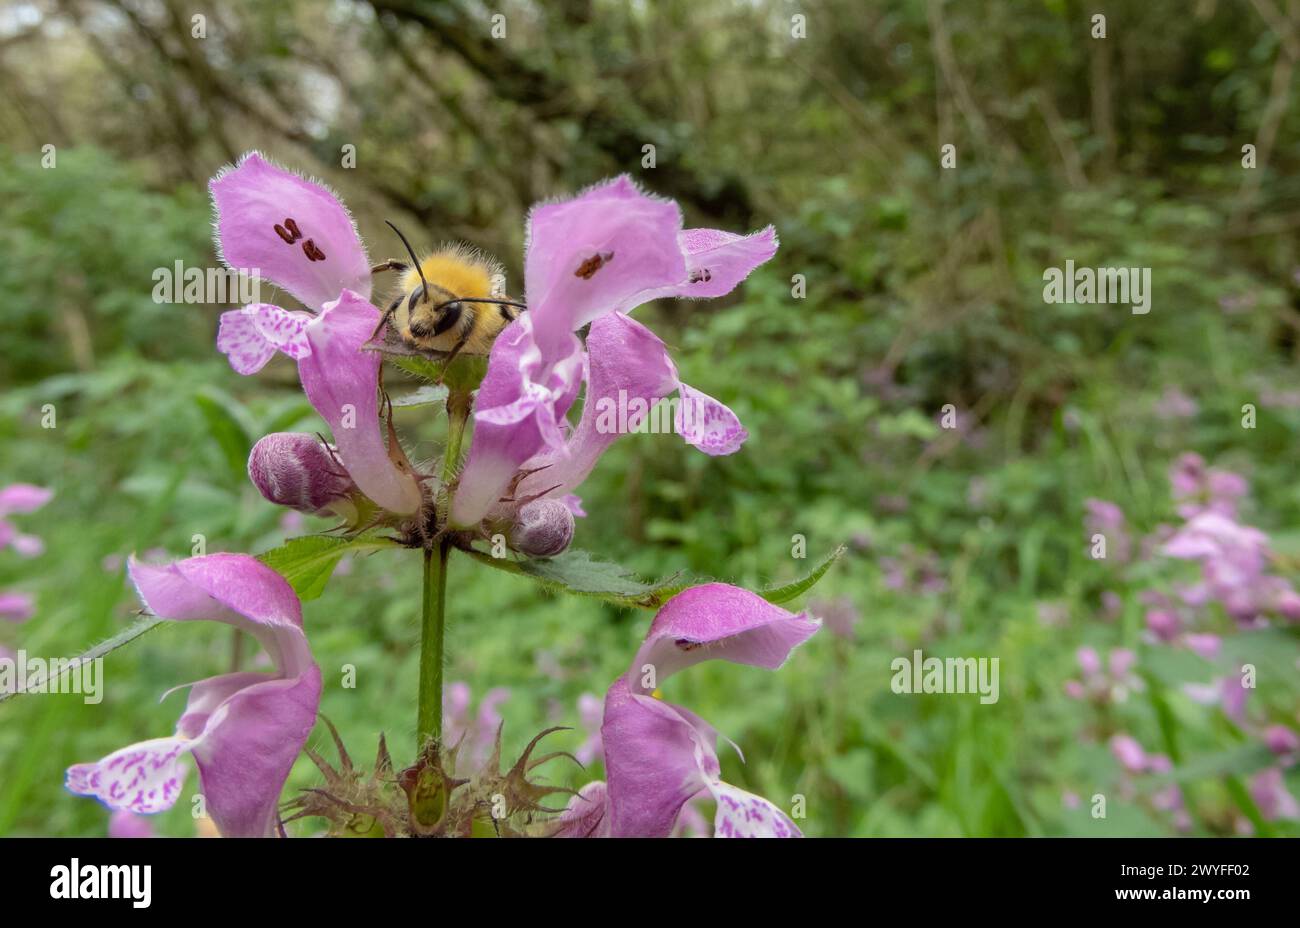 Bumblebee sui fiori viola lamium maculatum. Ortica morta maculata, henbit maculato o pianta in fiore del drago viola in primavera. Foto Stock